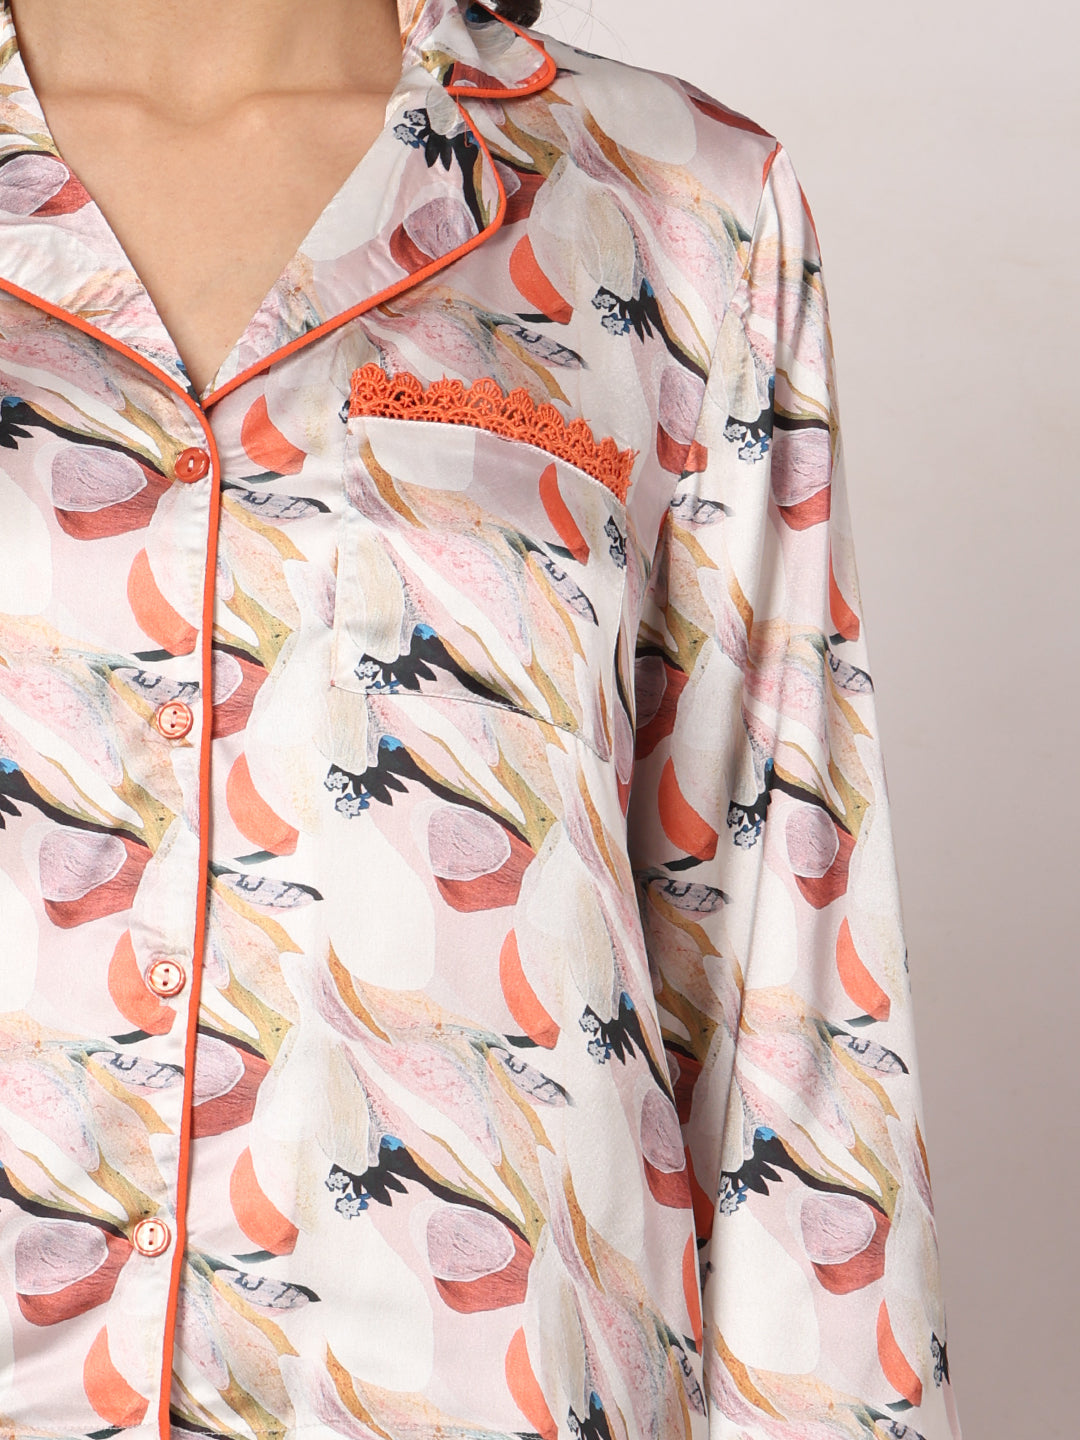 GOCHIKKO Women's Satin Printed Color Night Suit Set of Shirt & Pyjama Pack of 1(Copper Rust printed)